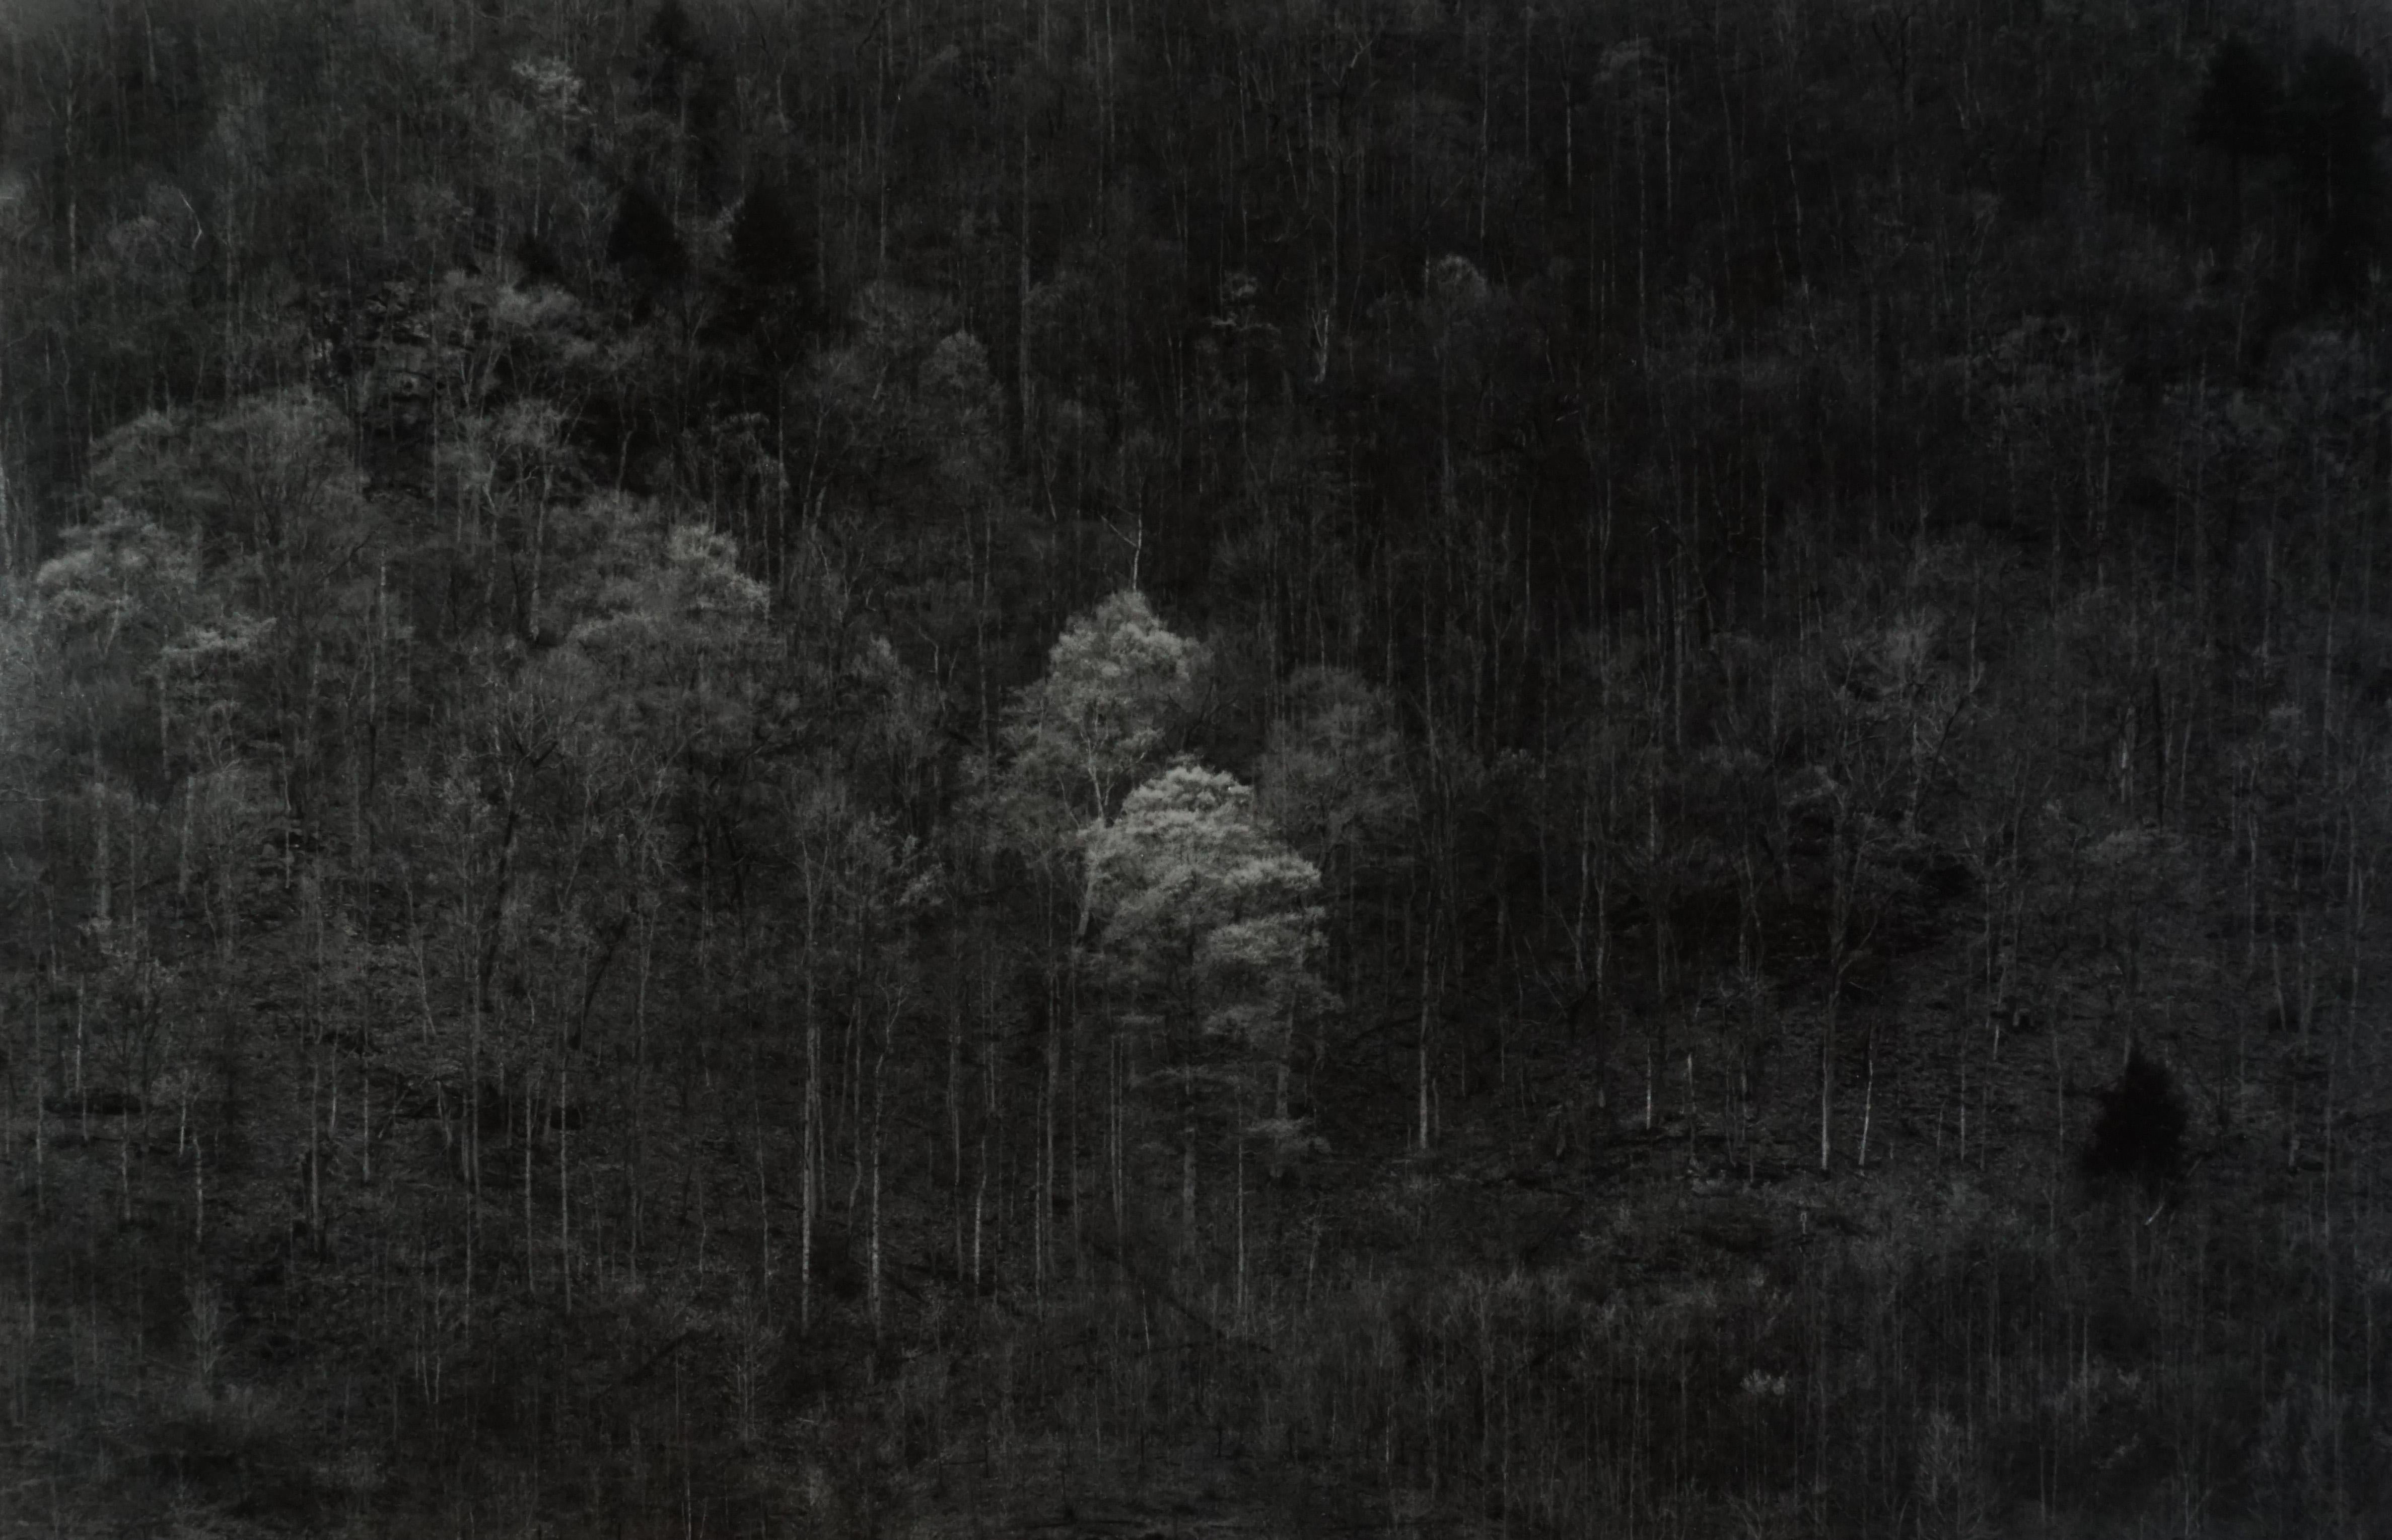 Kentucky Trees, 1965